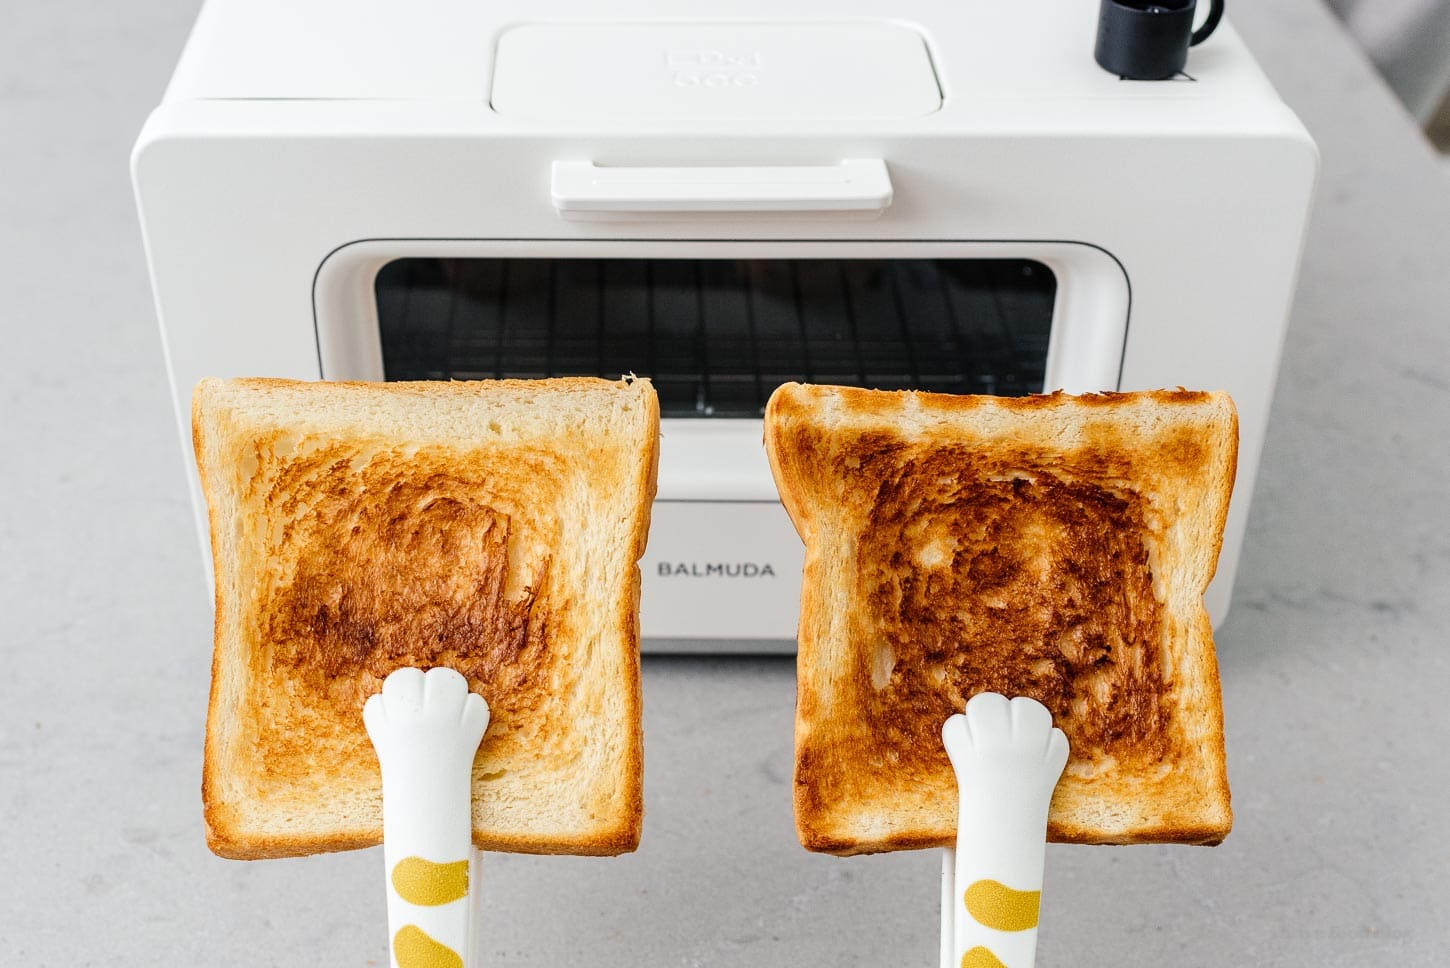 balmuda the toaster review | www.iamafoodblog.com